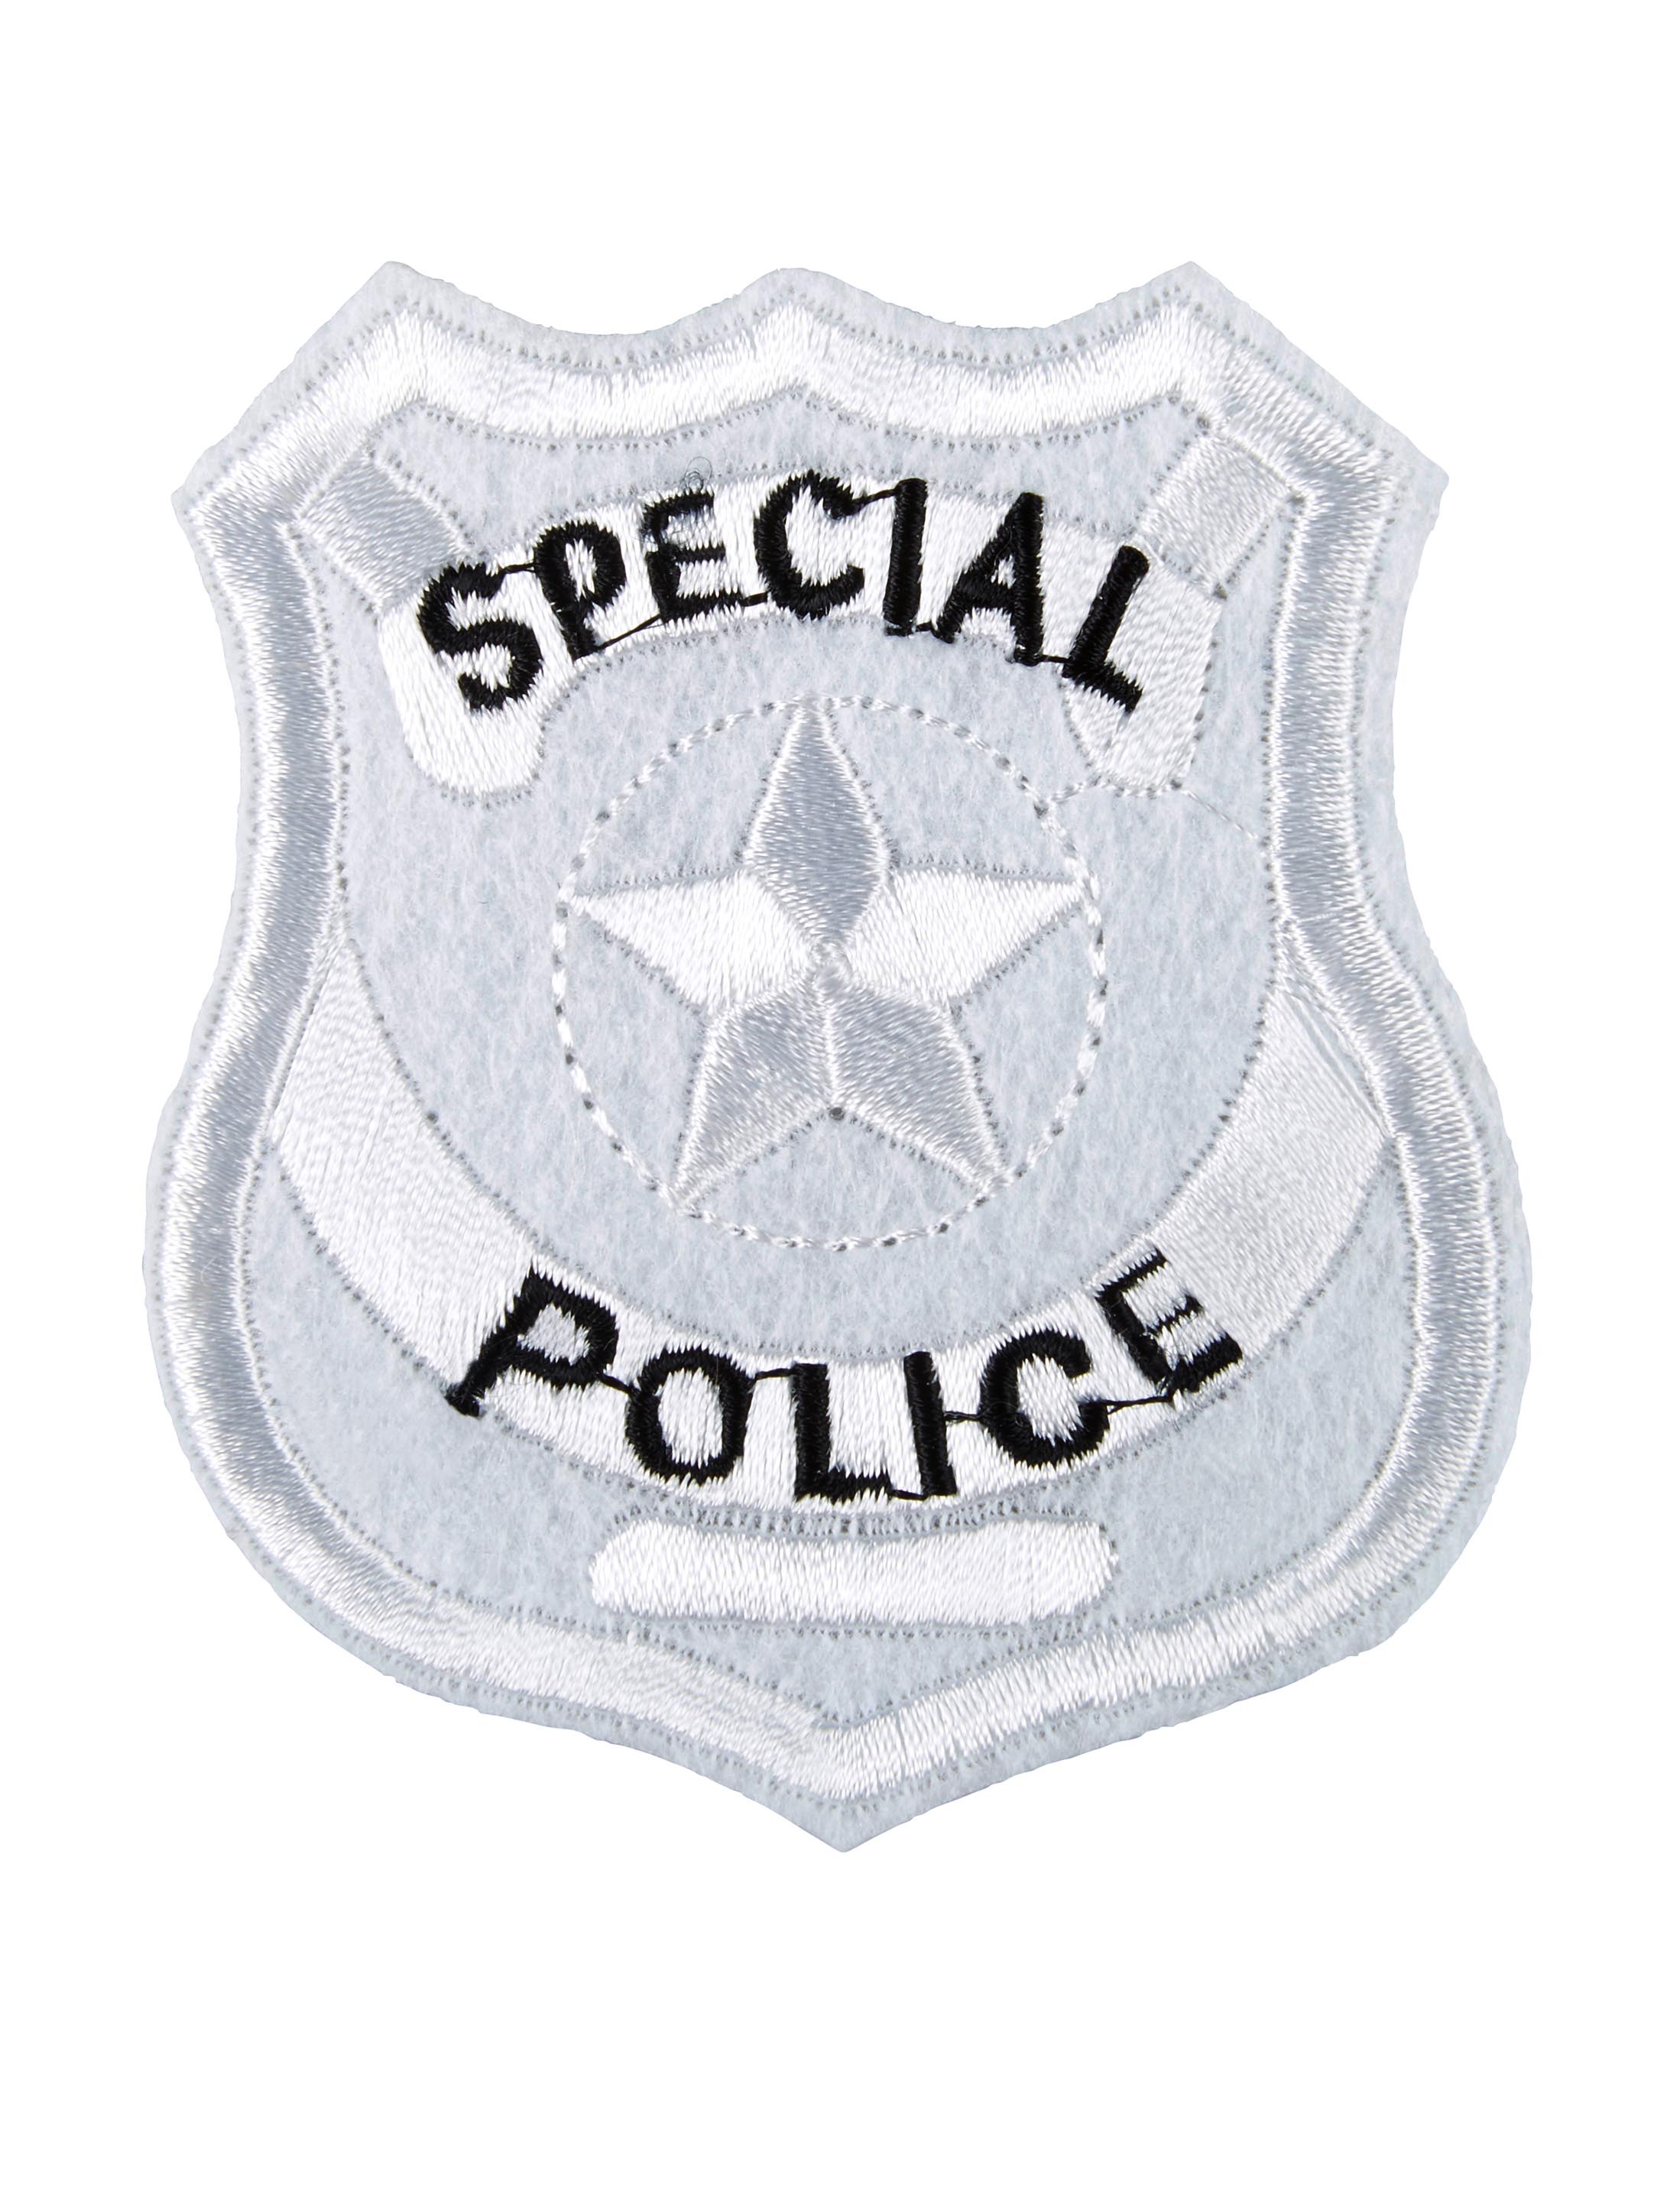 Aufnäher Special Police